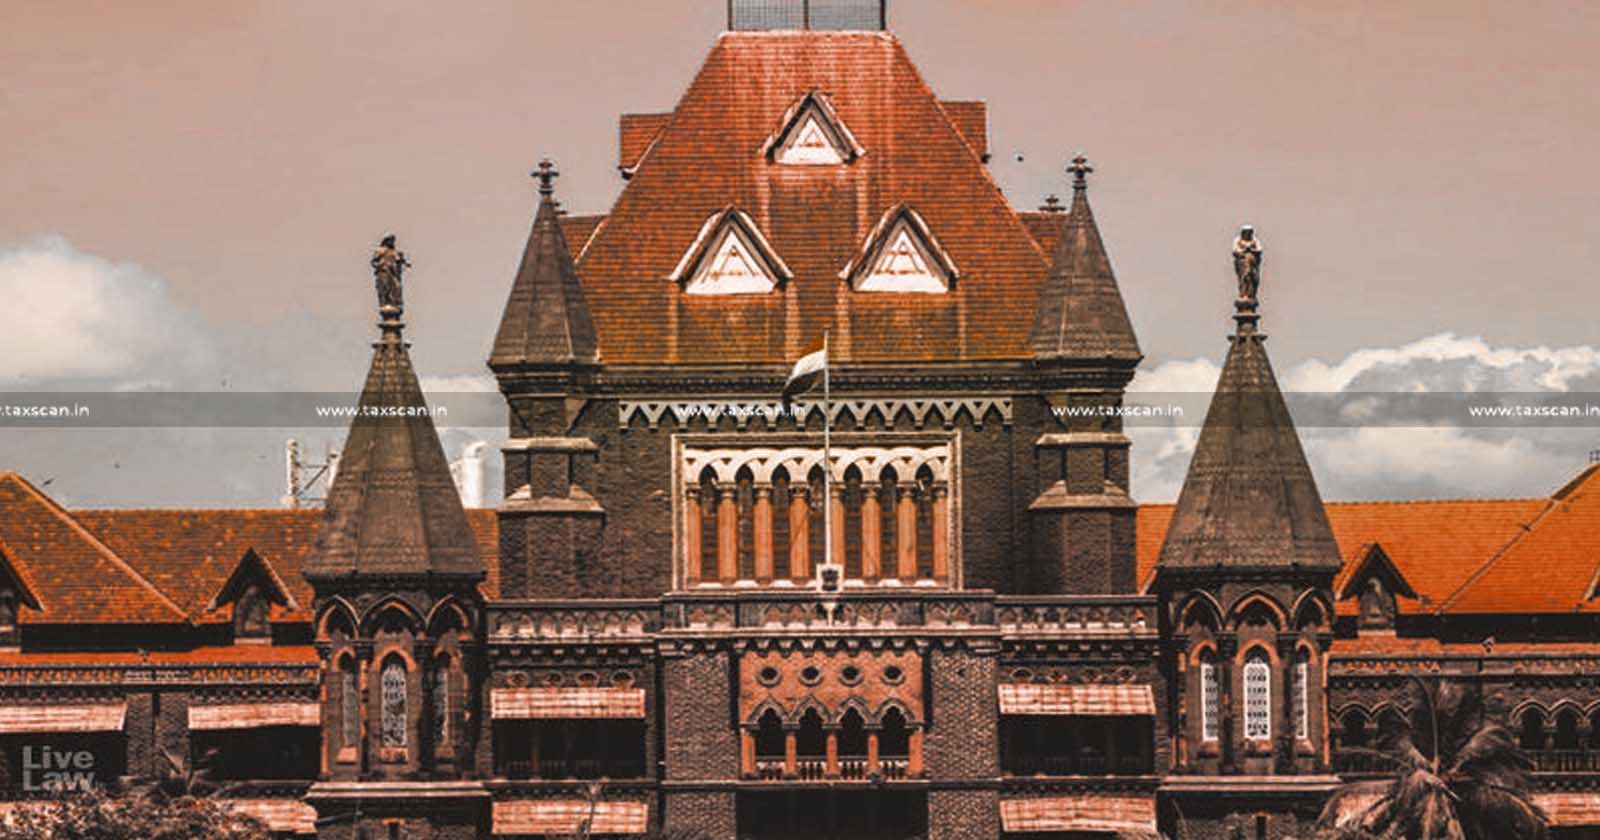 First Global - FEMA - Adjudicating Authority - FERA - Bombay High Court - taxscan